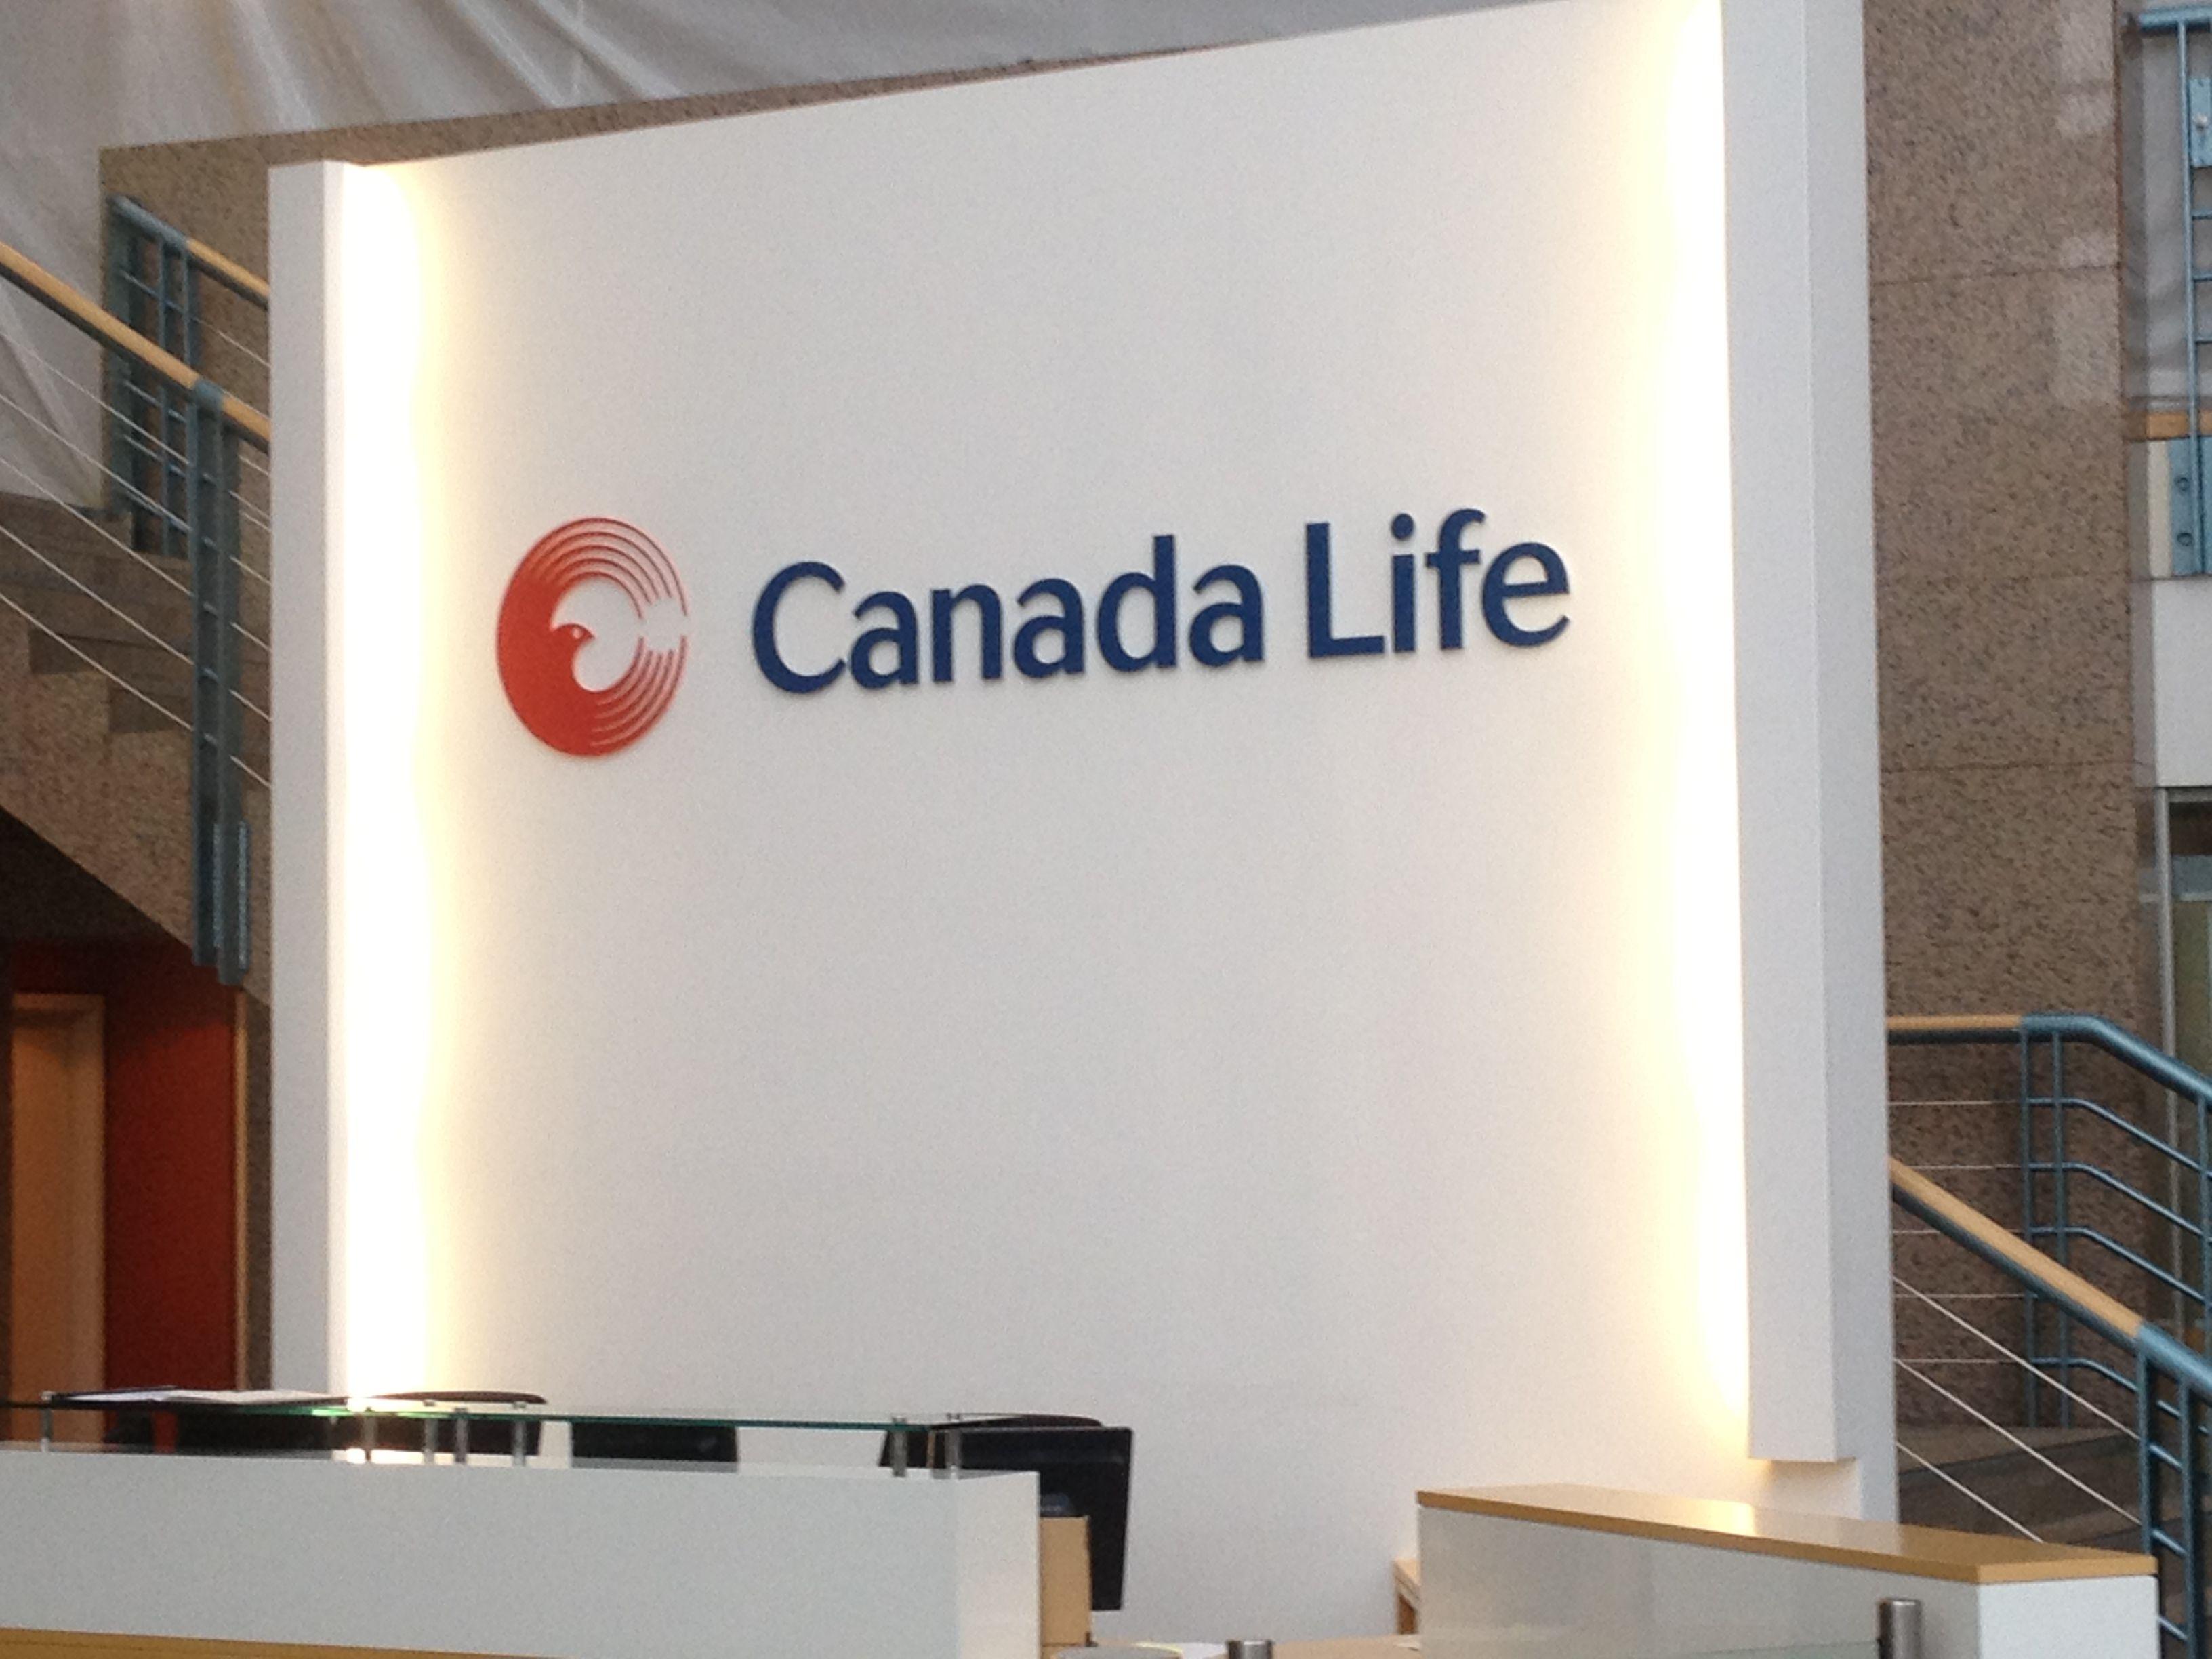 Reception Wall Logo - Reception Wall Logo (Canada Life) - Action Signs